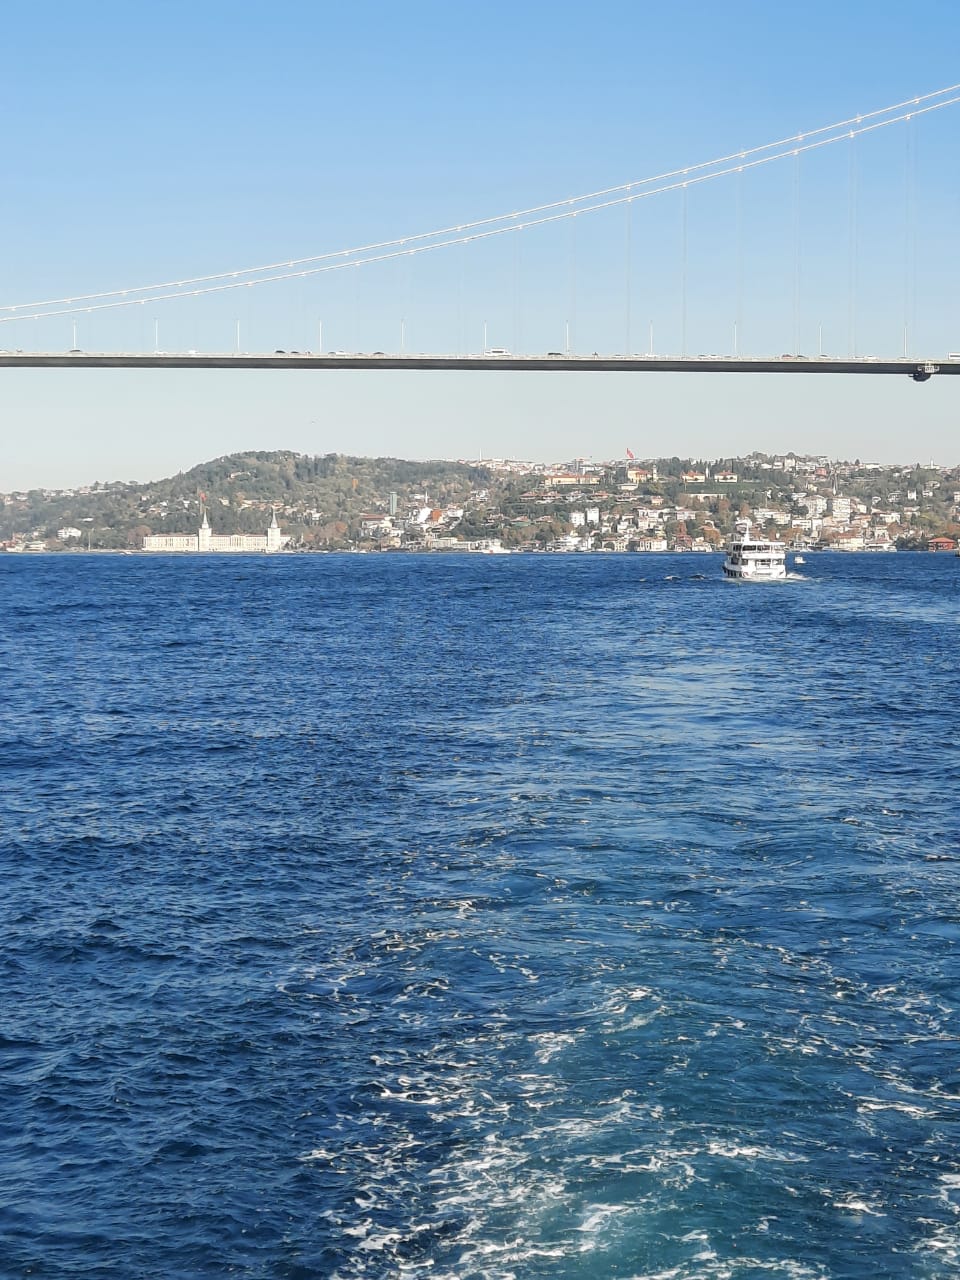 The Bosphorus Bridge in Istanbul